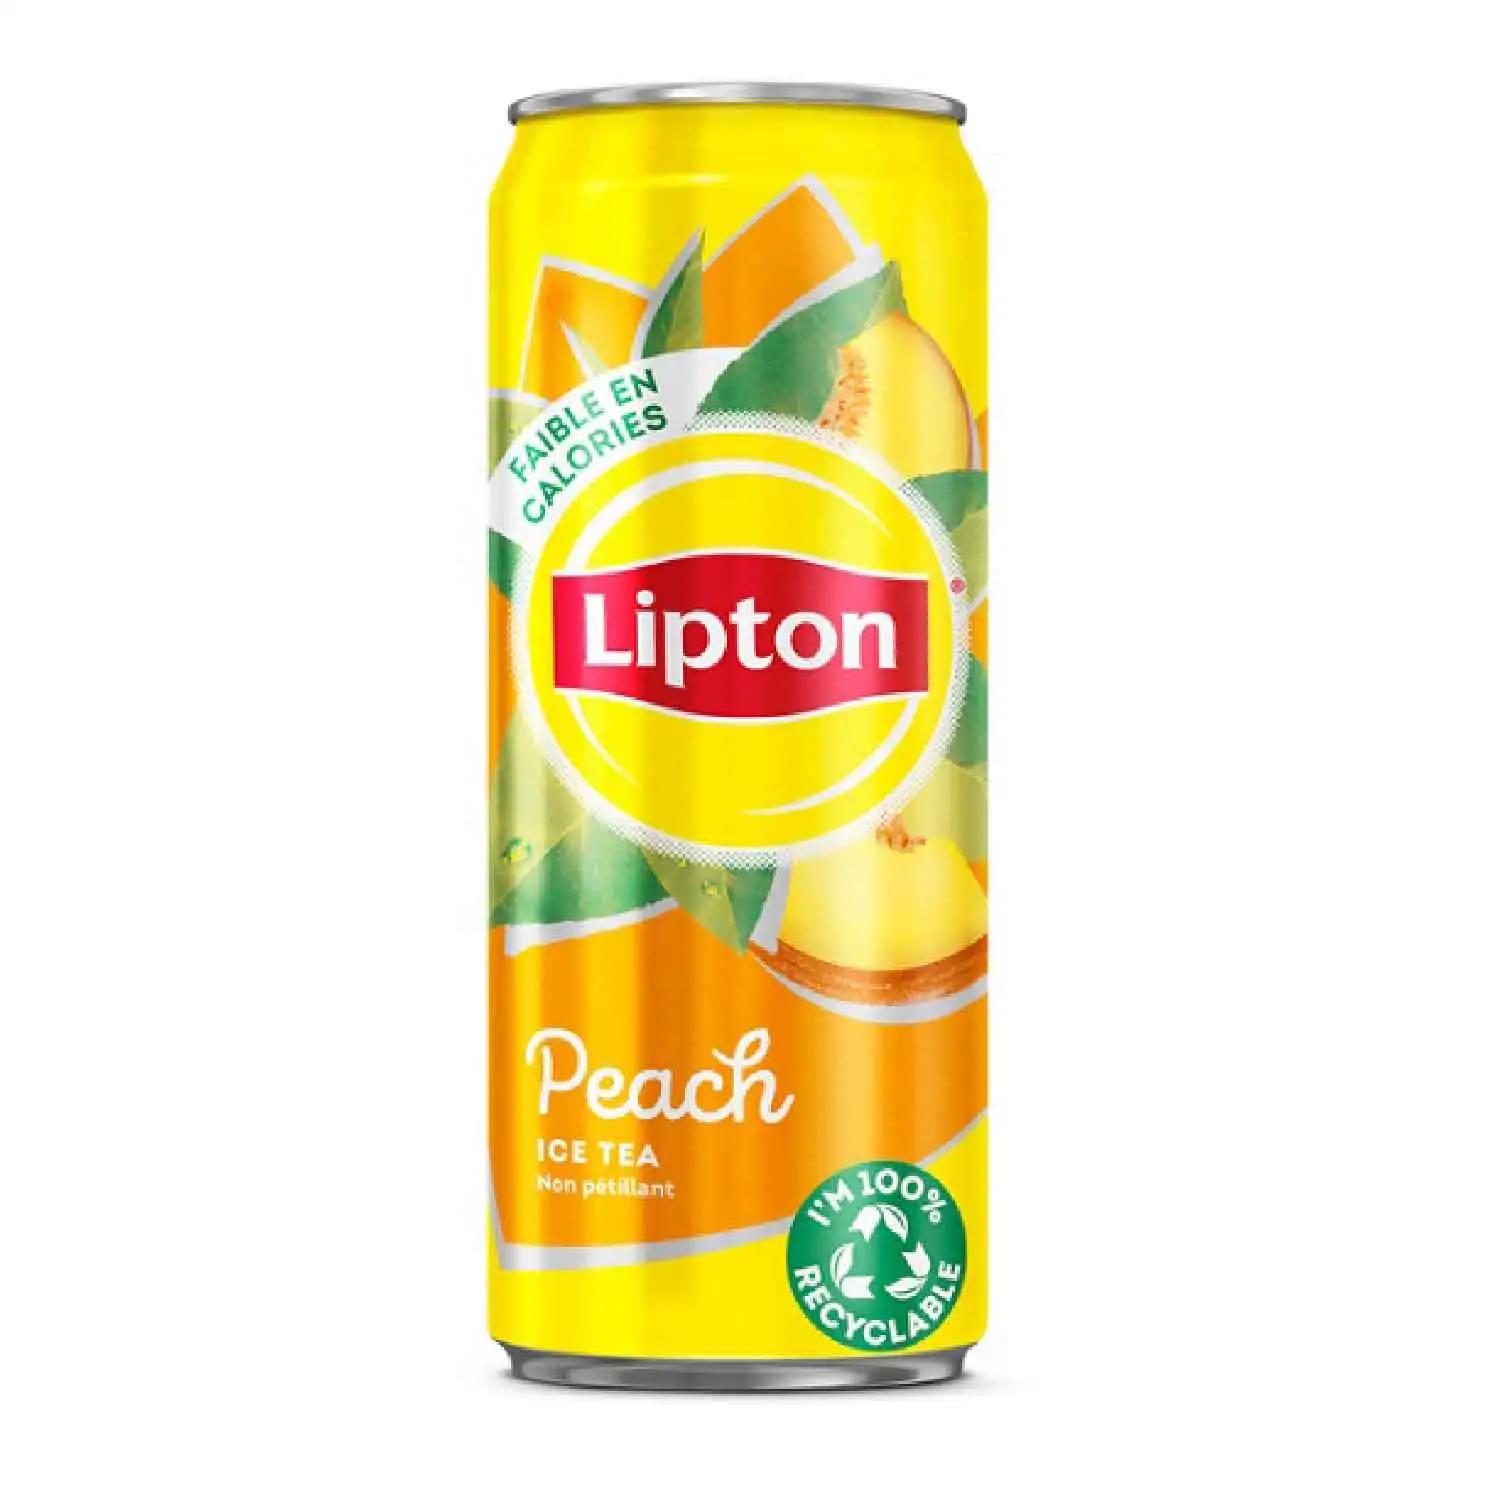 Lipton ice tea peach 33cl - Buy at Real Tobacco